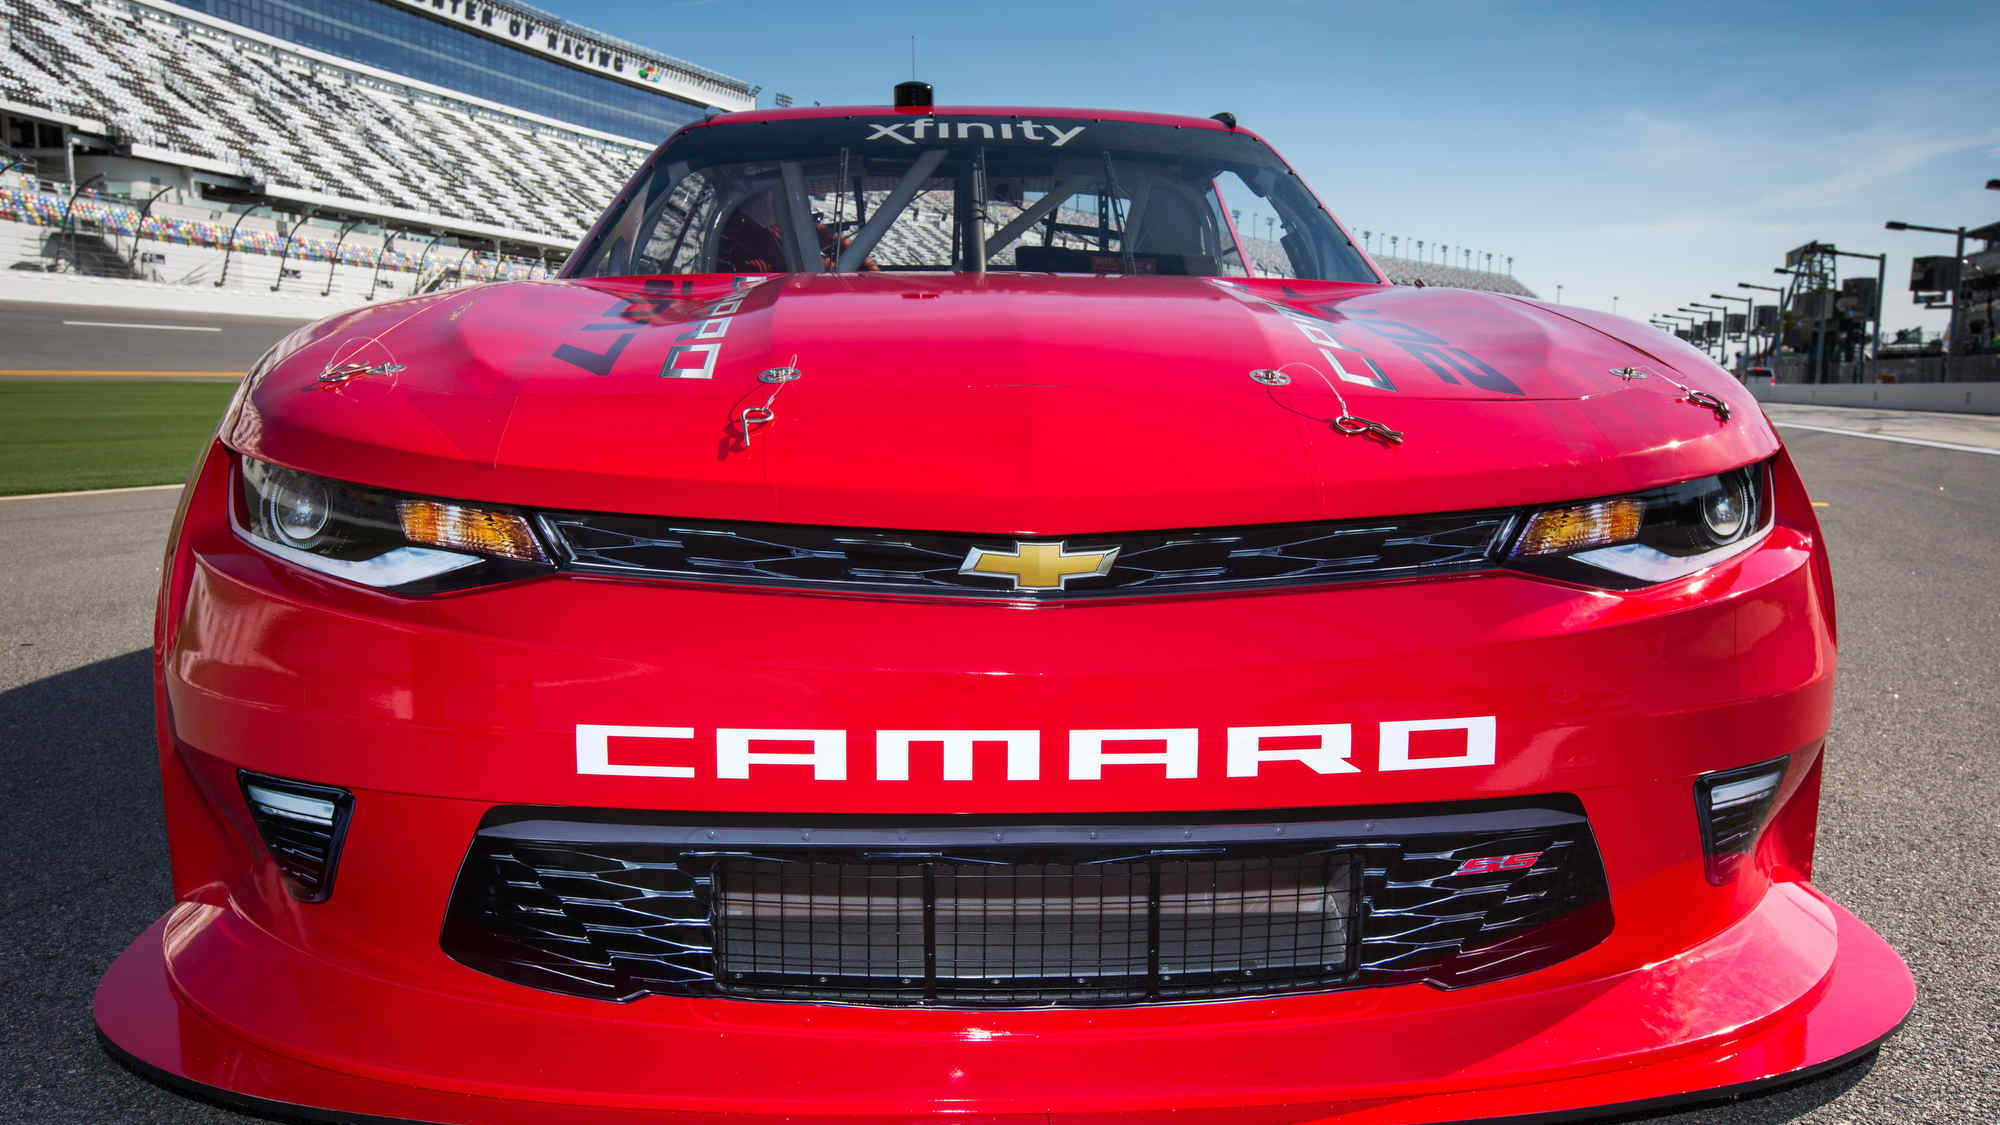 2017 Chevrolet Carmaro NASCAR Xfinity Series